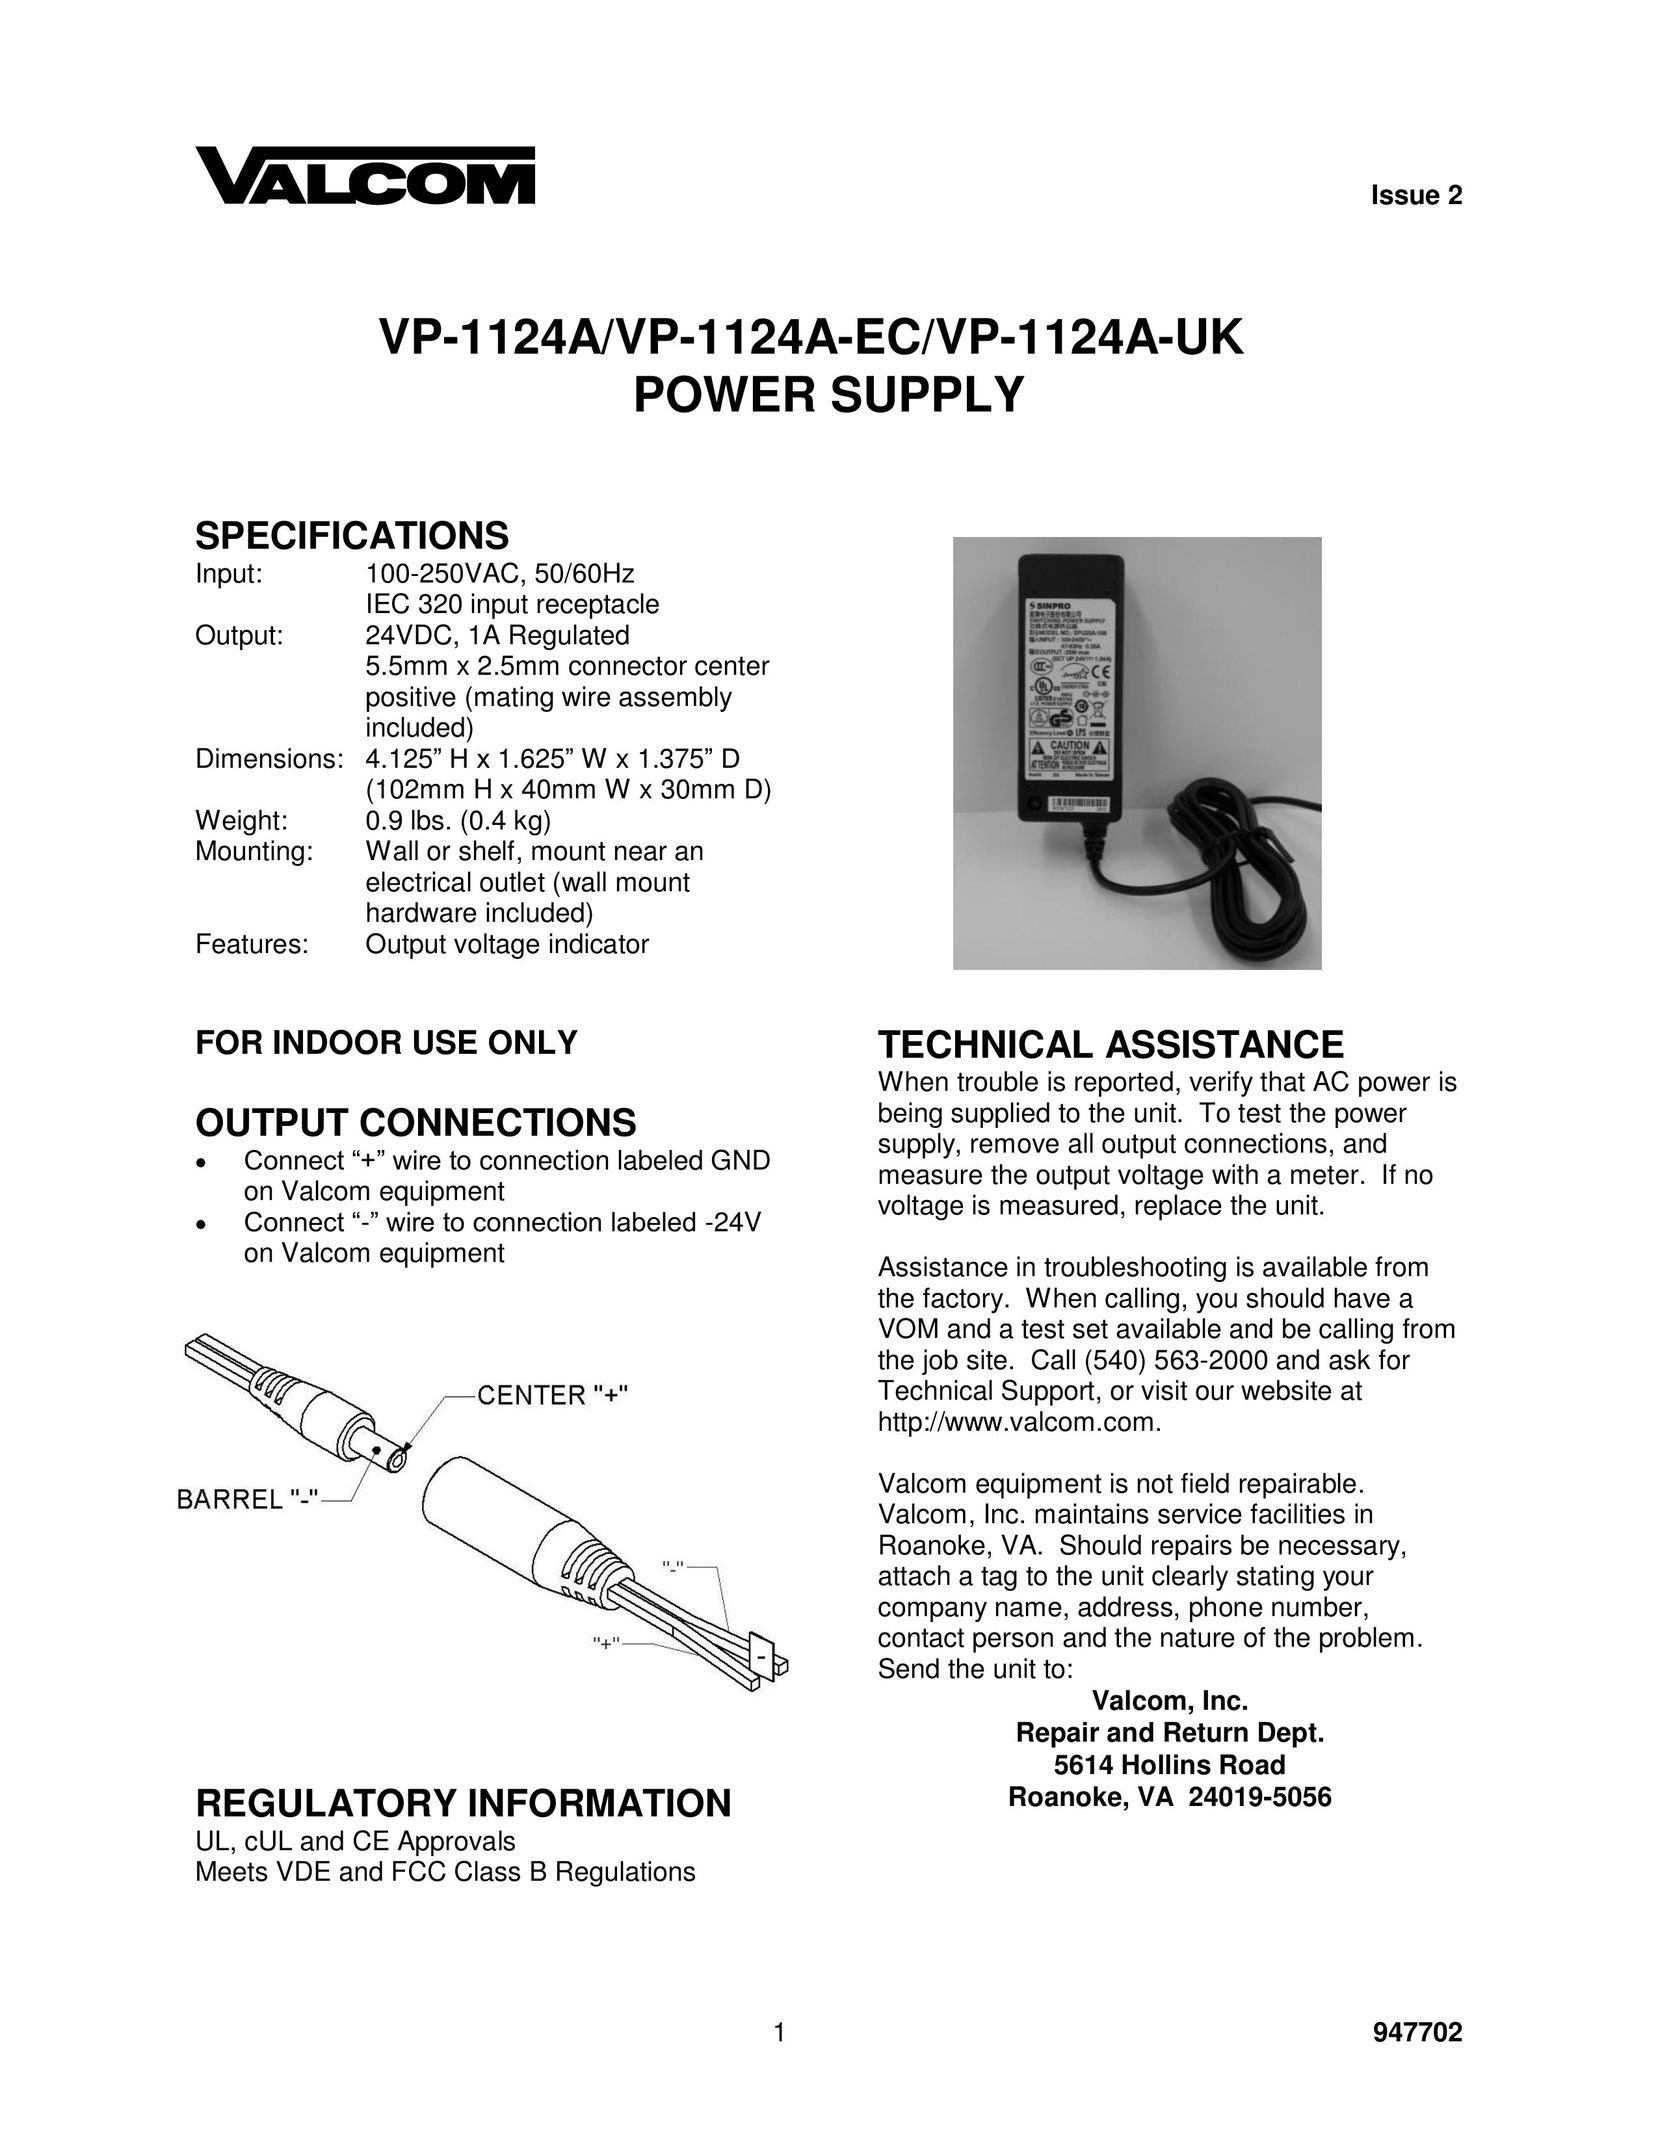 Valcom VP-1124A-UK Power Supply User Manual